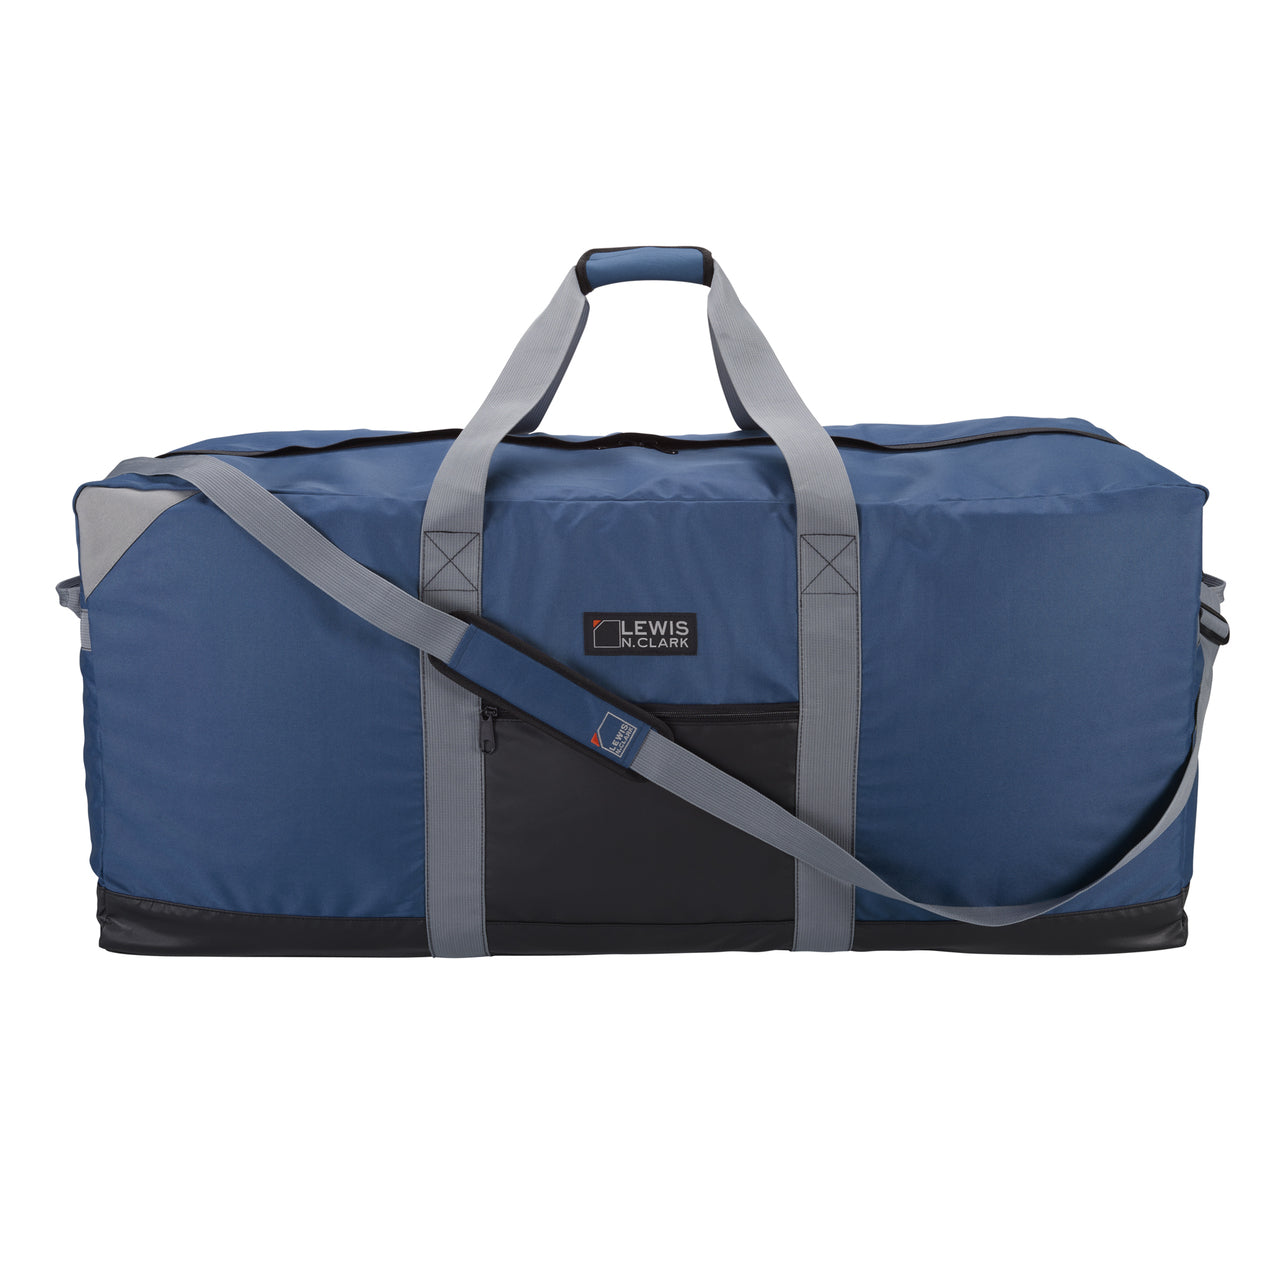 Helly Hansen Duffel Bag: Light Weight Unisex, Multiple Sizes and